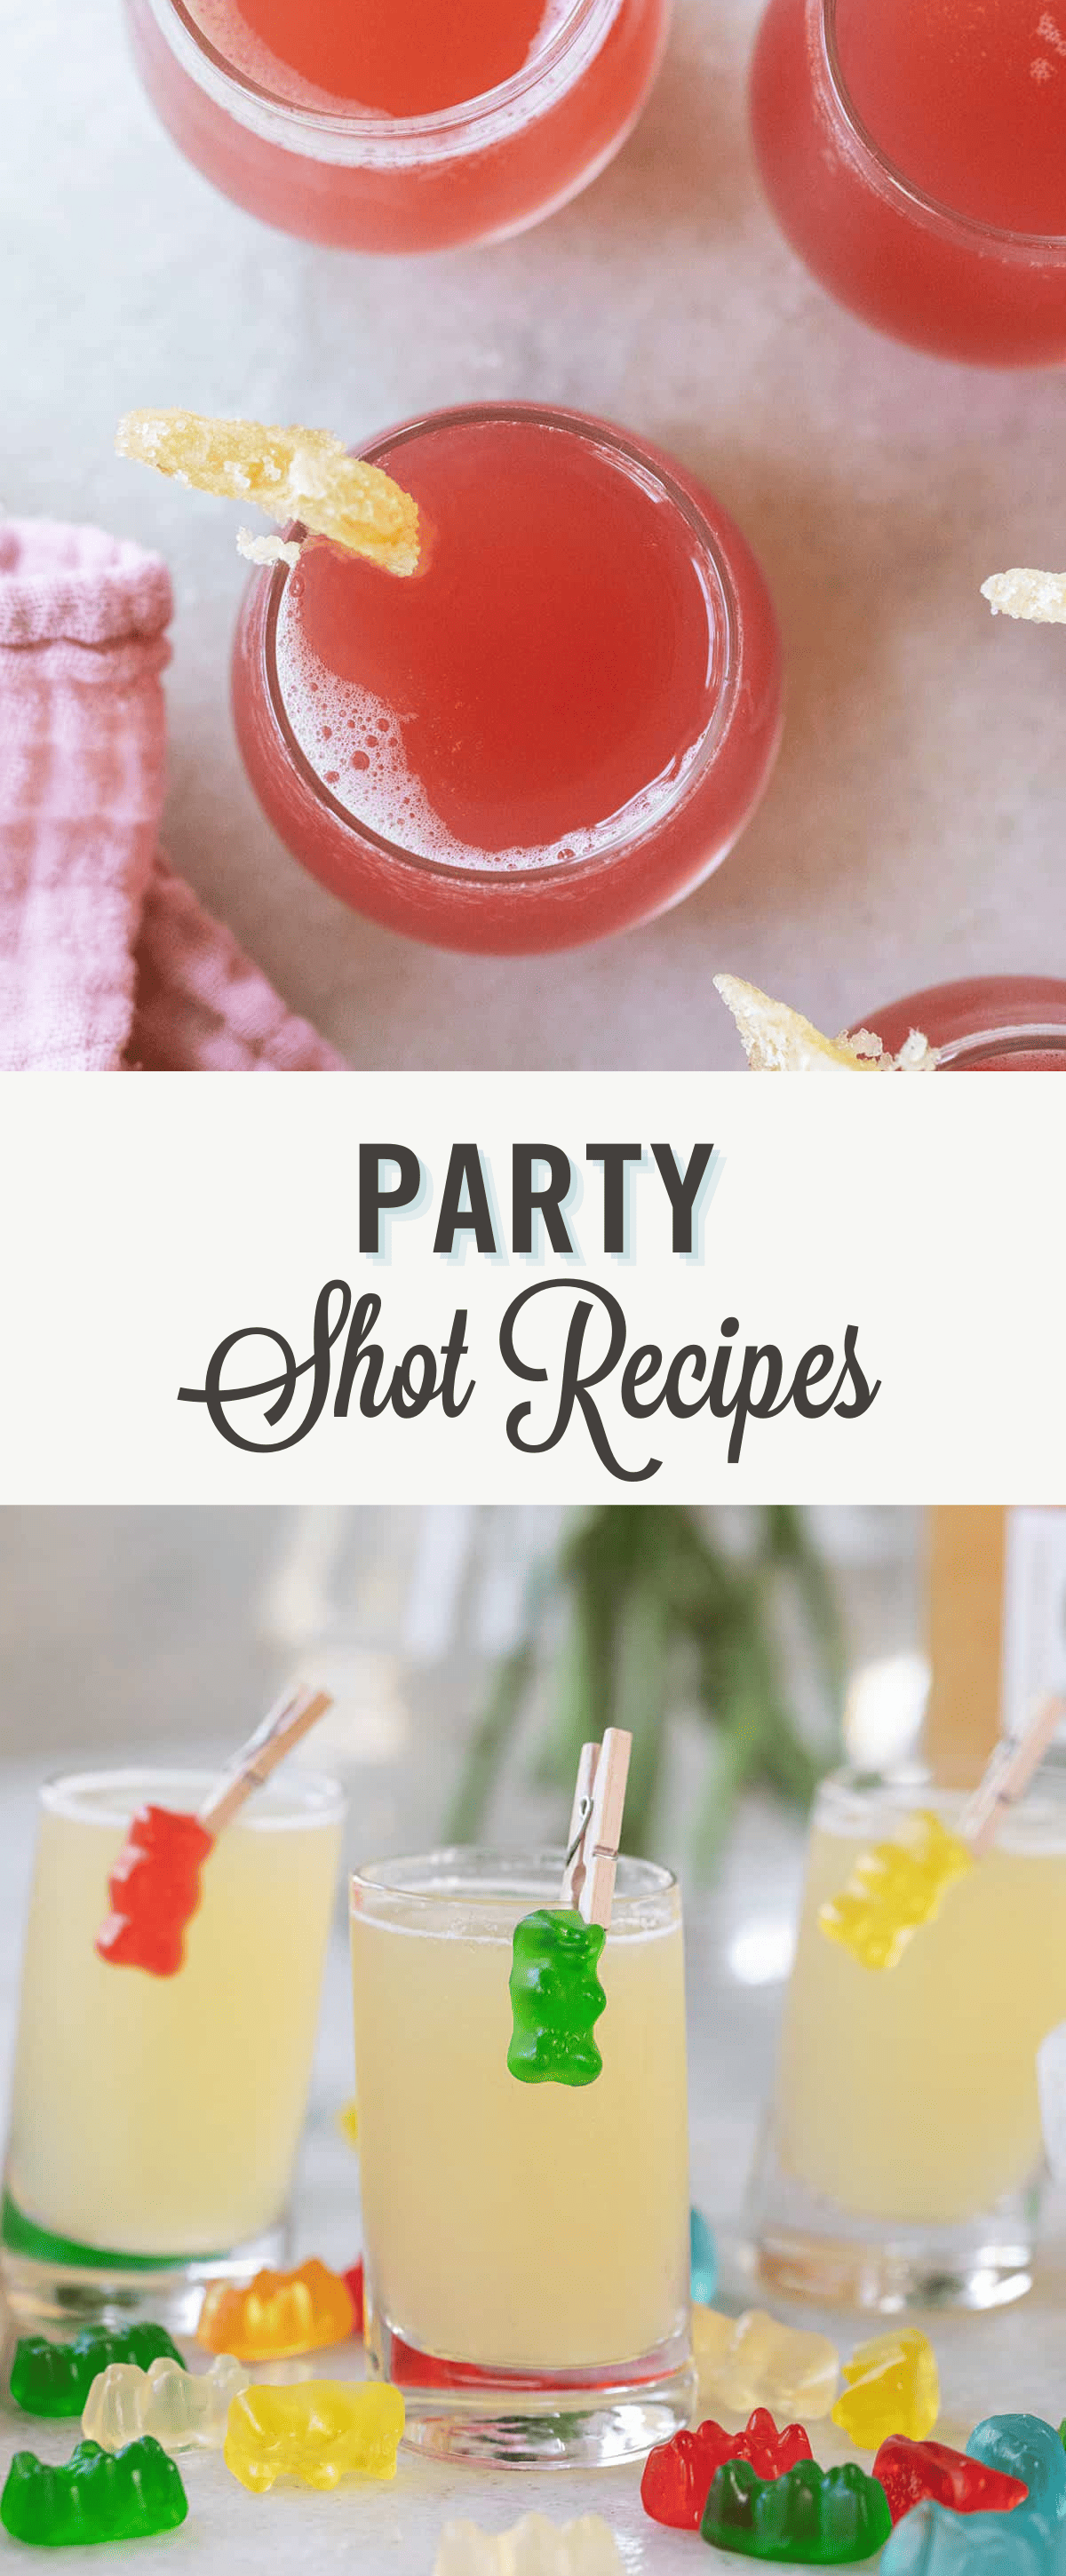 Party shot recipes.